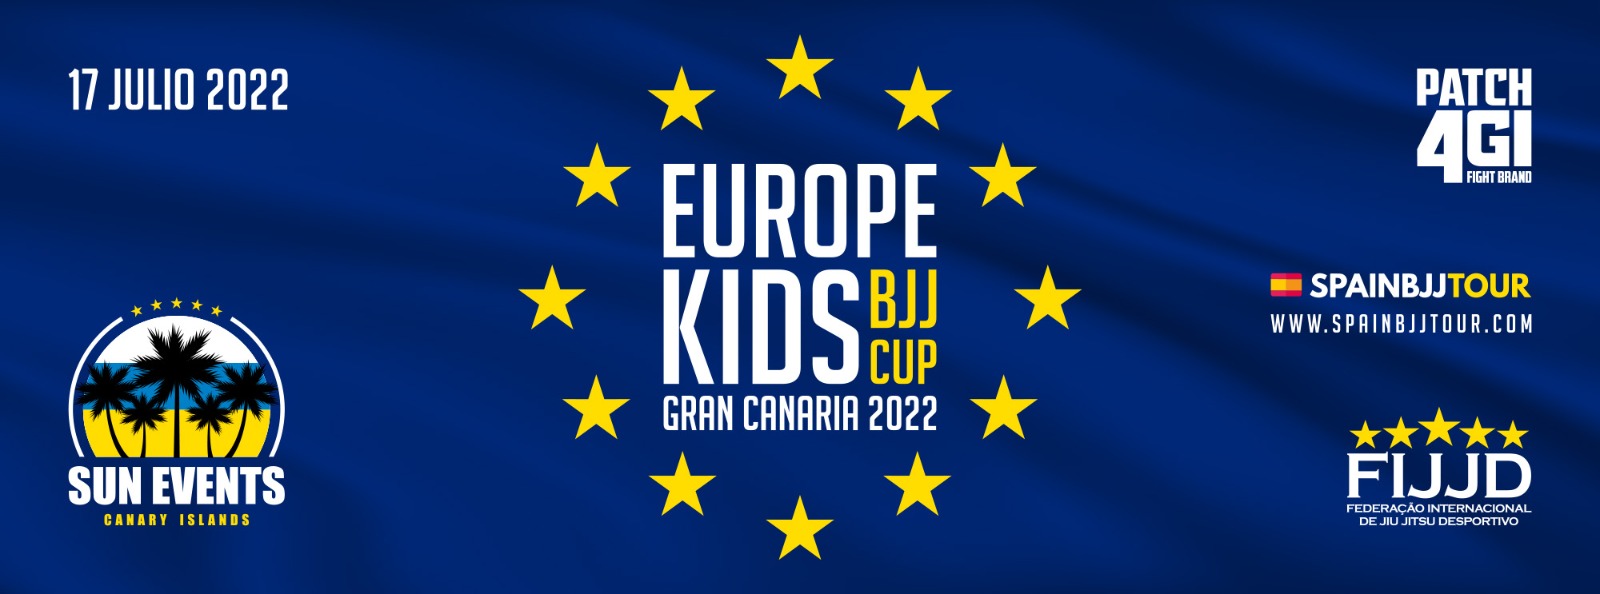 Europe BJJ Kids 2022